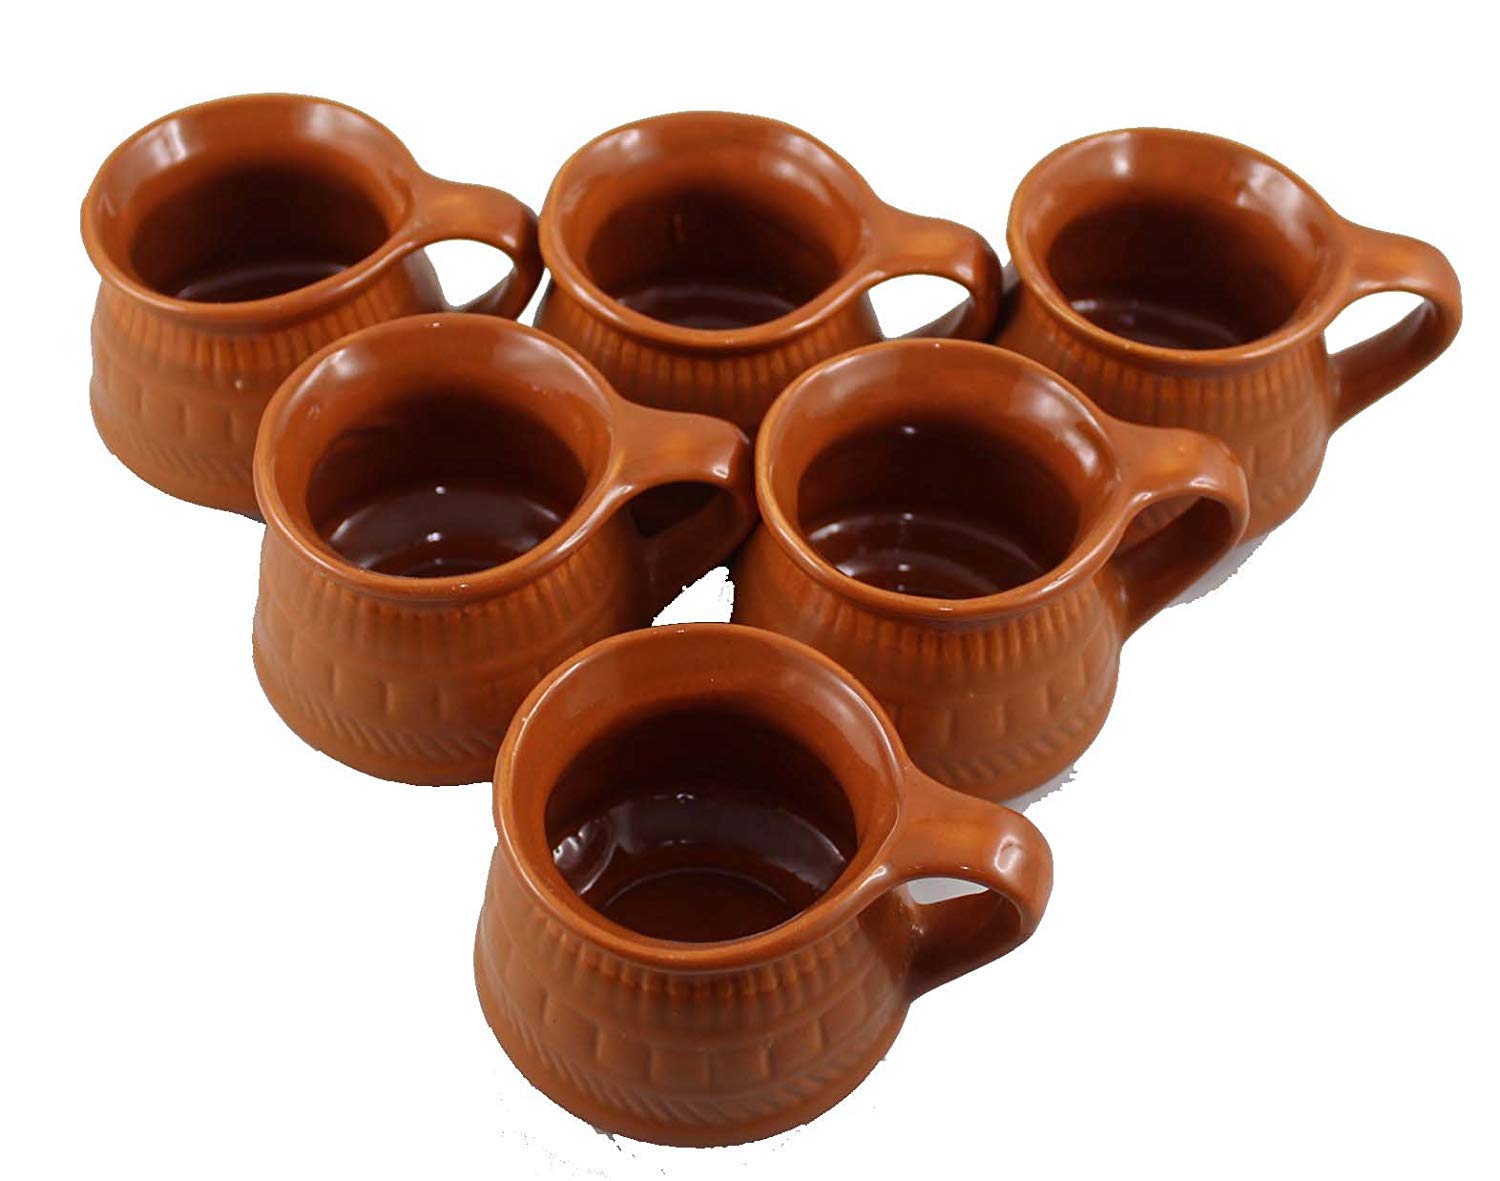 Odishabazaar Ceramic Kulhar Cups Traditional Indian Chai Tea Cup Set of 6 (skc-47)